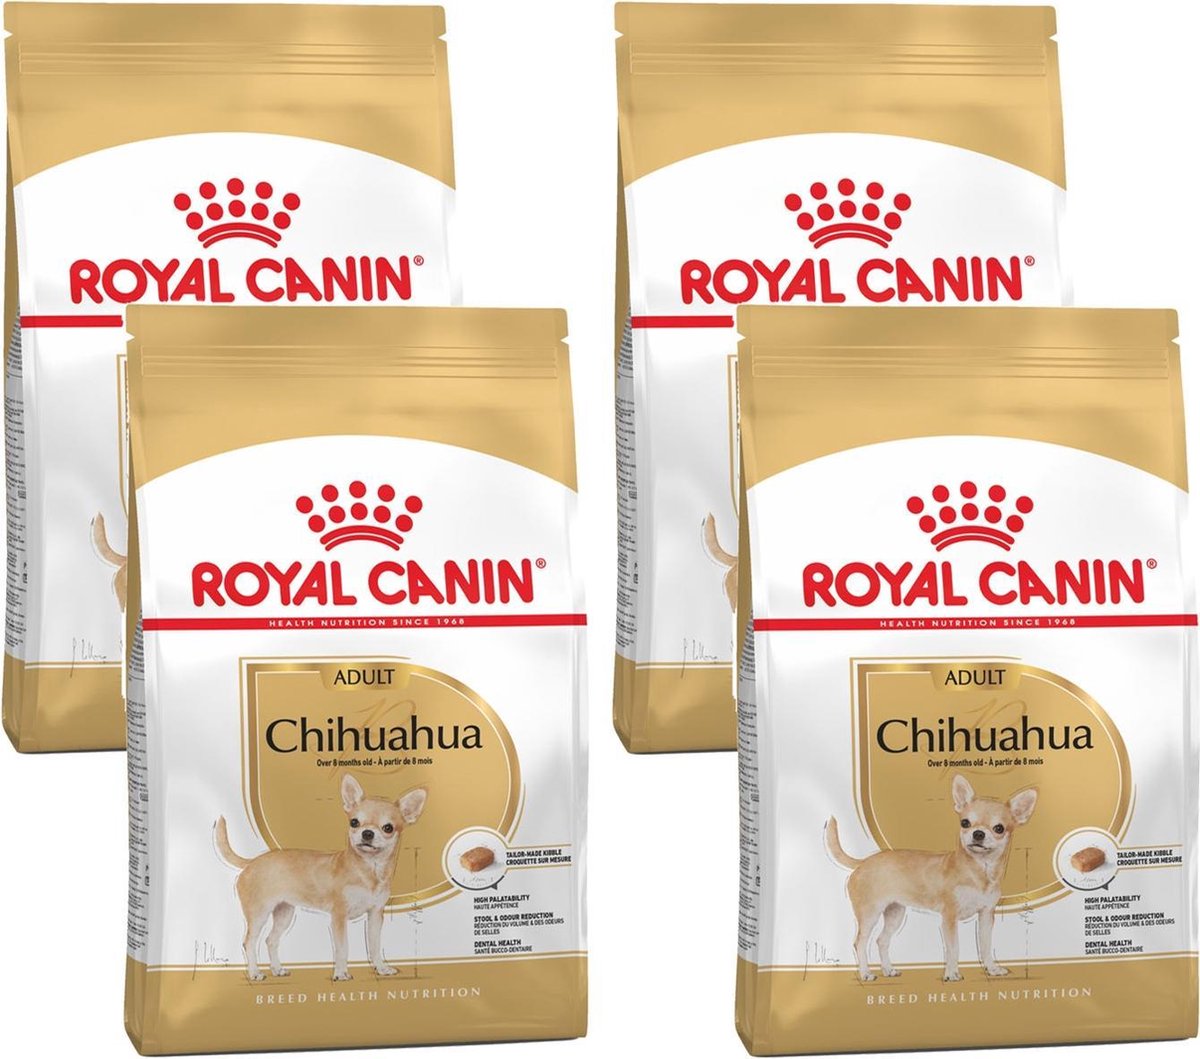 Royal Canin Bhn Chihuahua Adult - Hondenvoer - 4 x 3 kg - Royal Canin